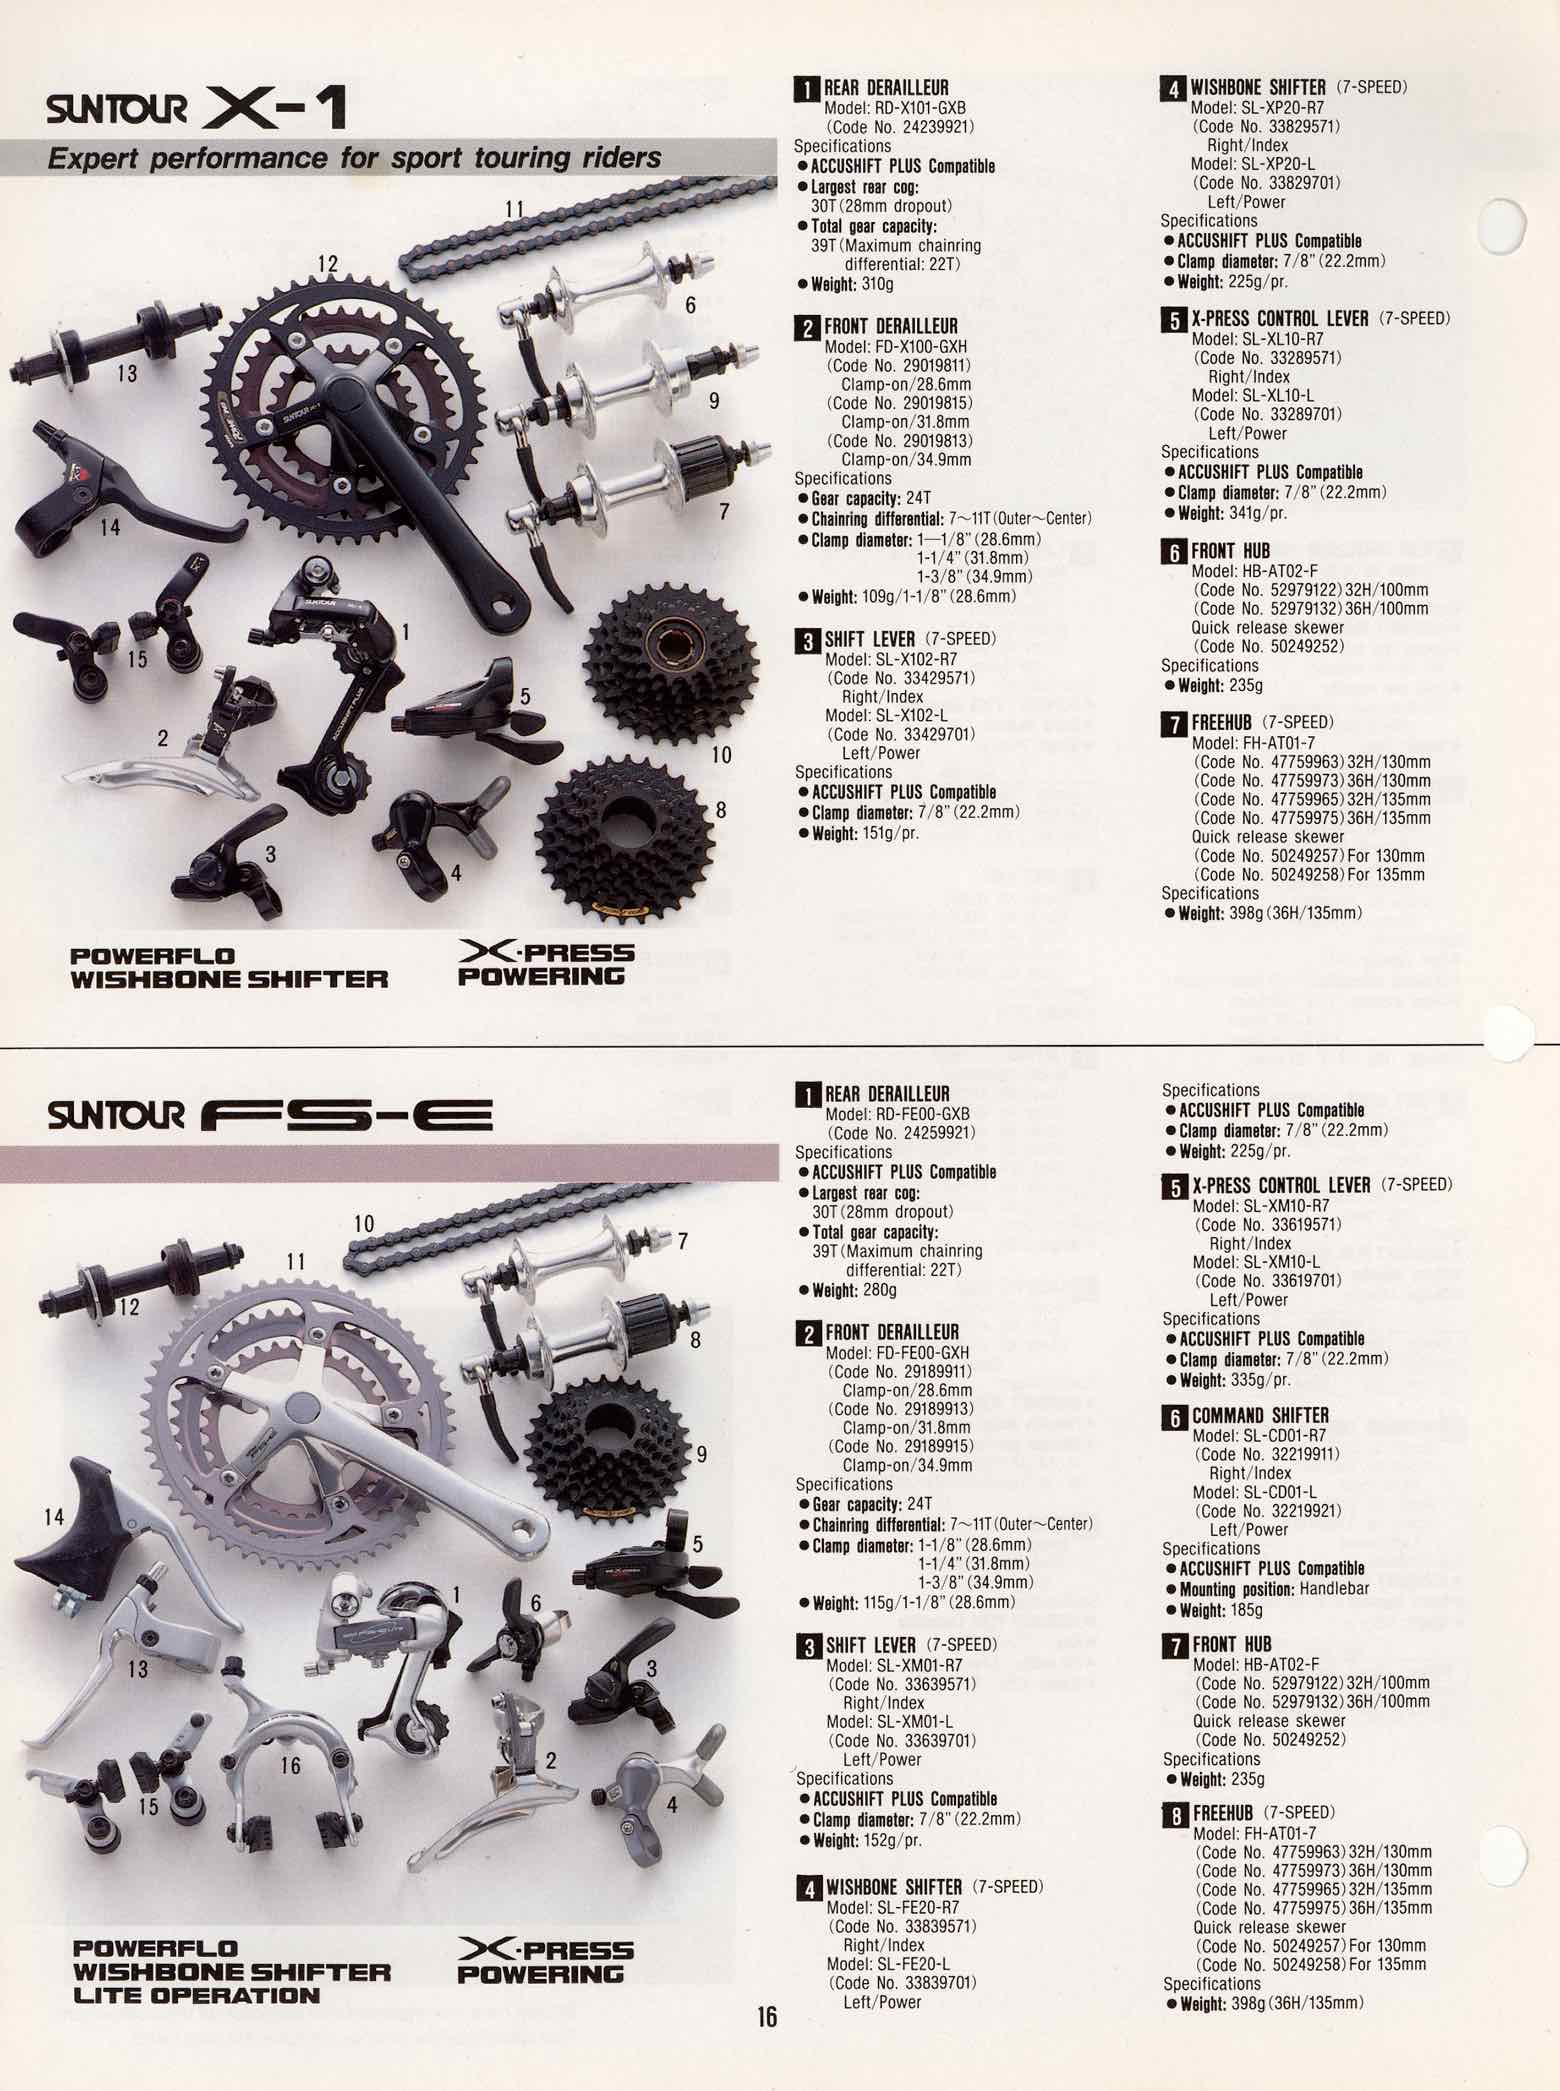 SunTour Bicycle Equipment Catalog 1992 - Page 16 main image